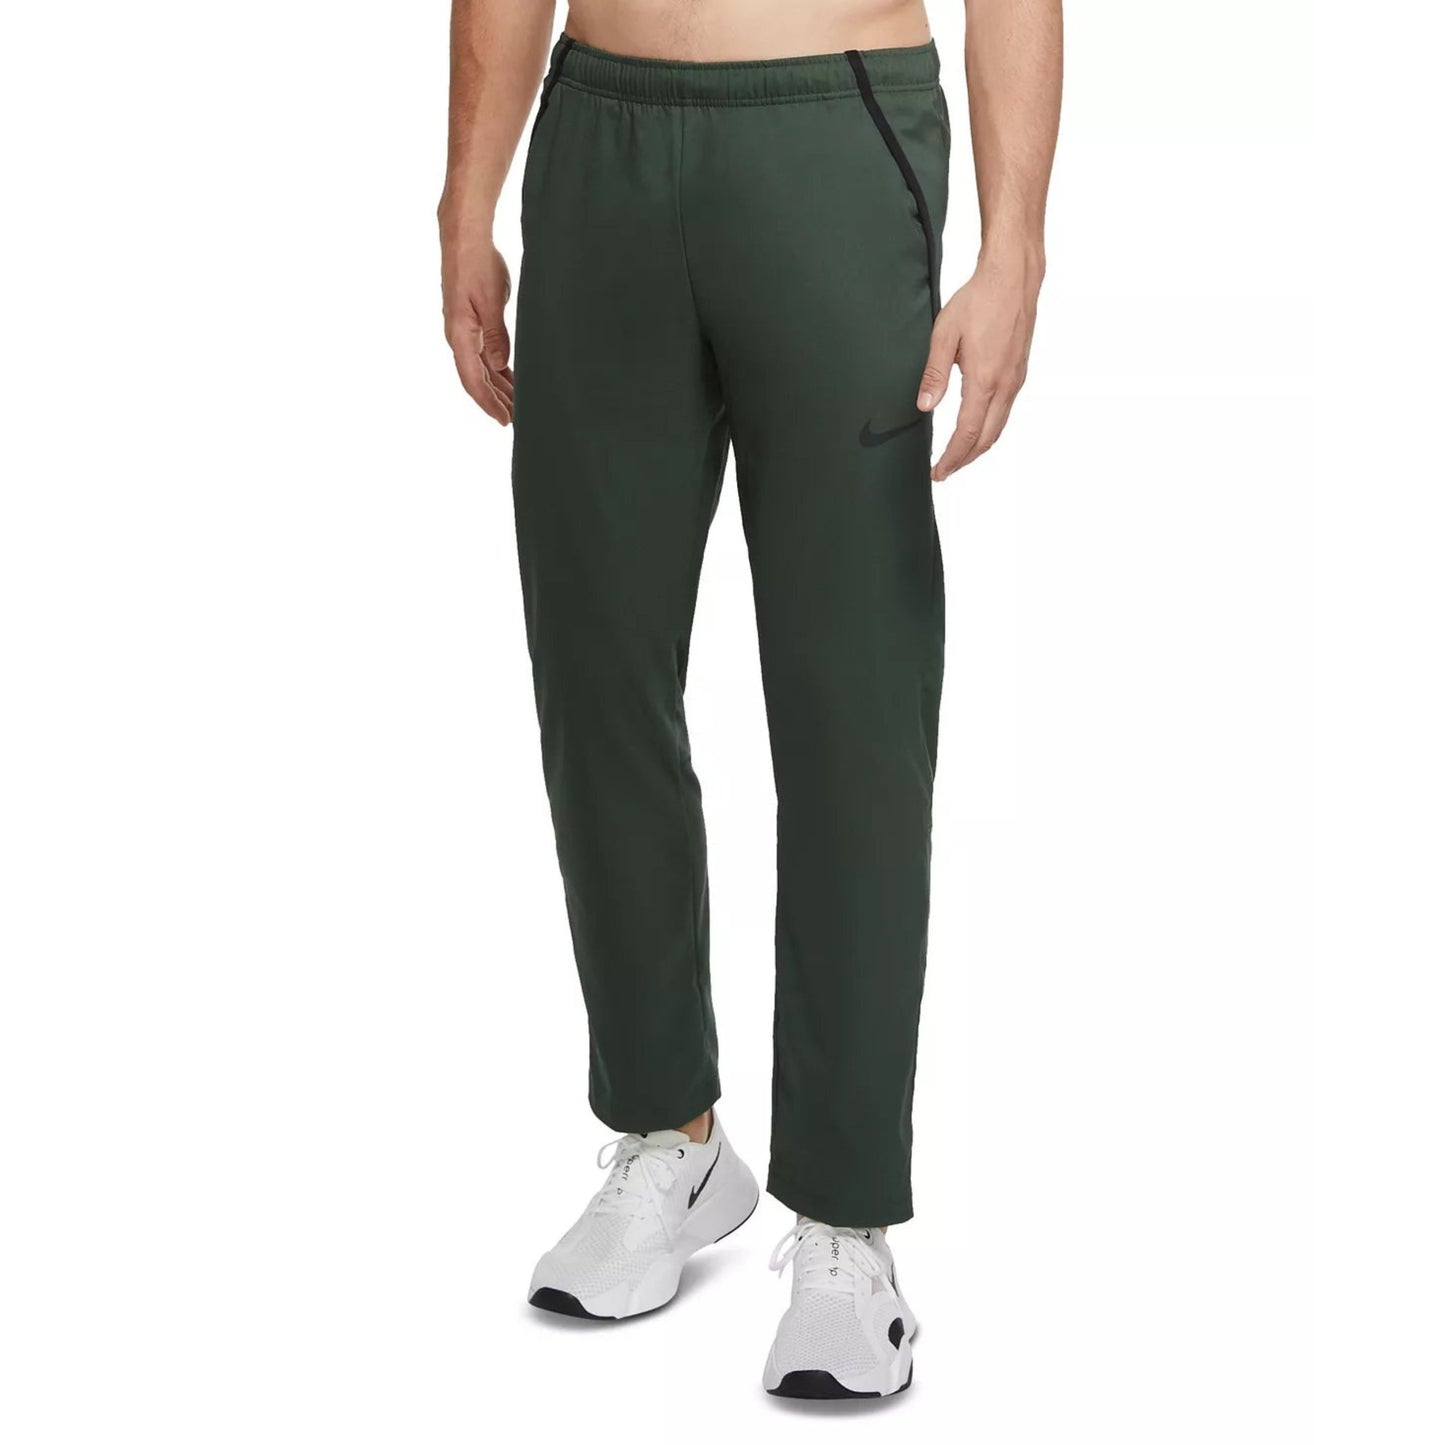 Nike Mens Dri-FIT Woven Training Pants, Green